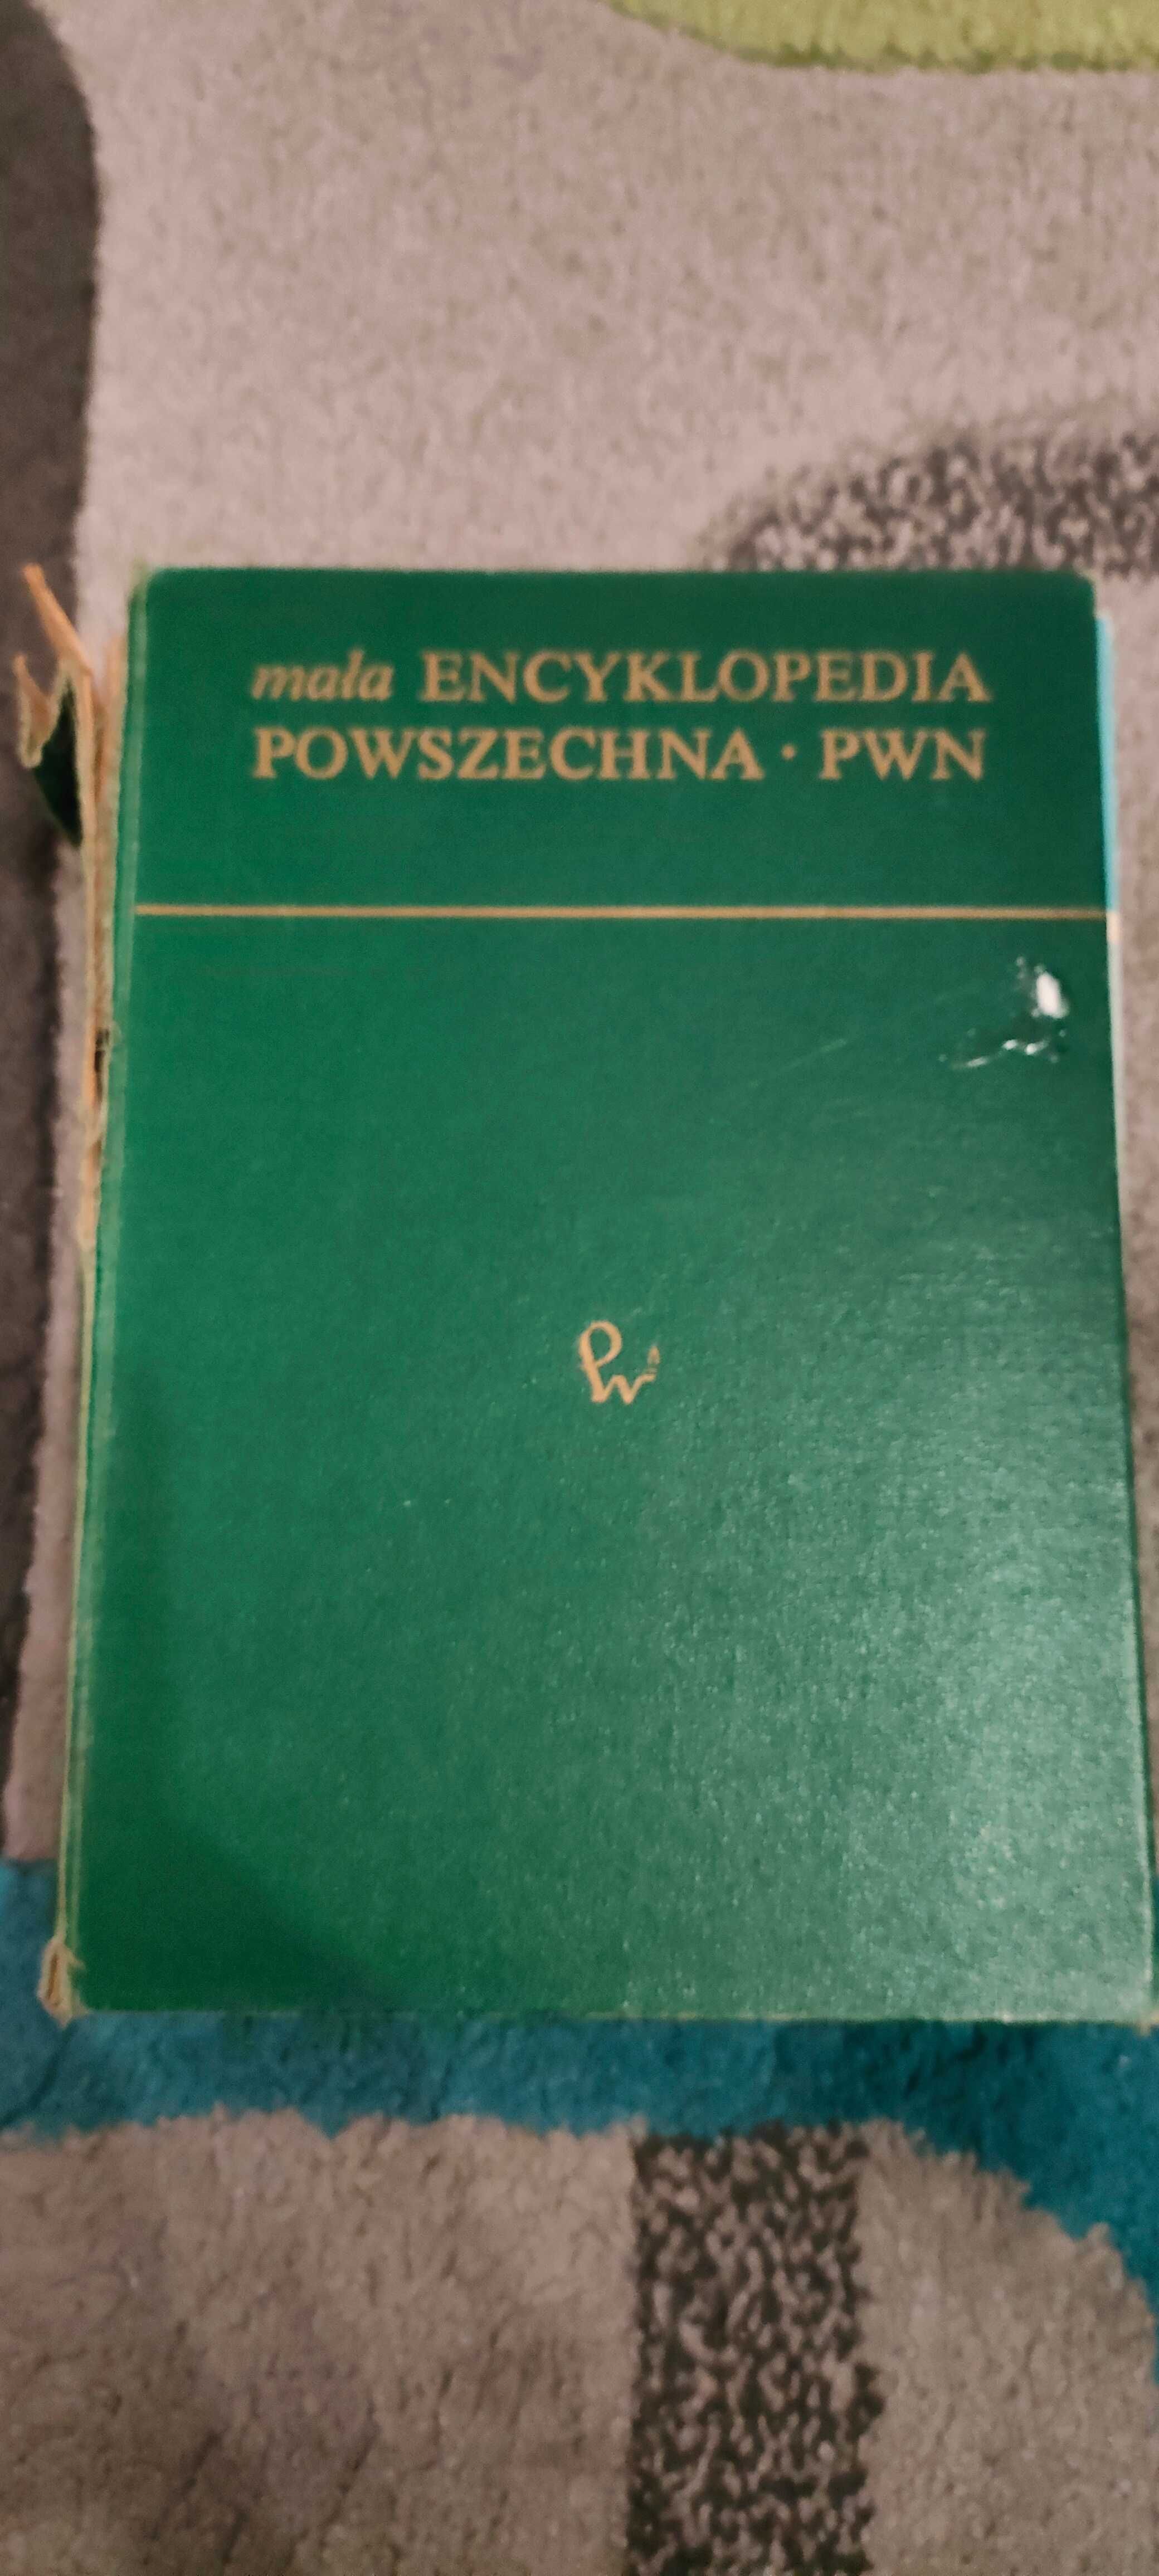 Książki, Atlas Świata, encyklopedia, leksykon szkolny, bajki.